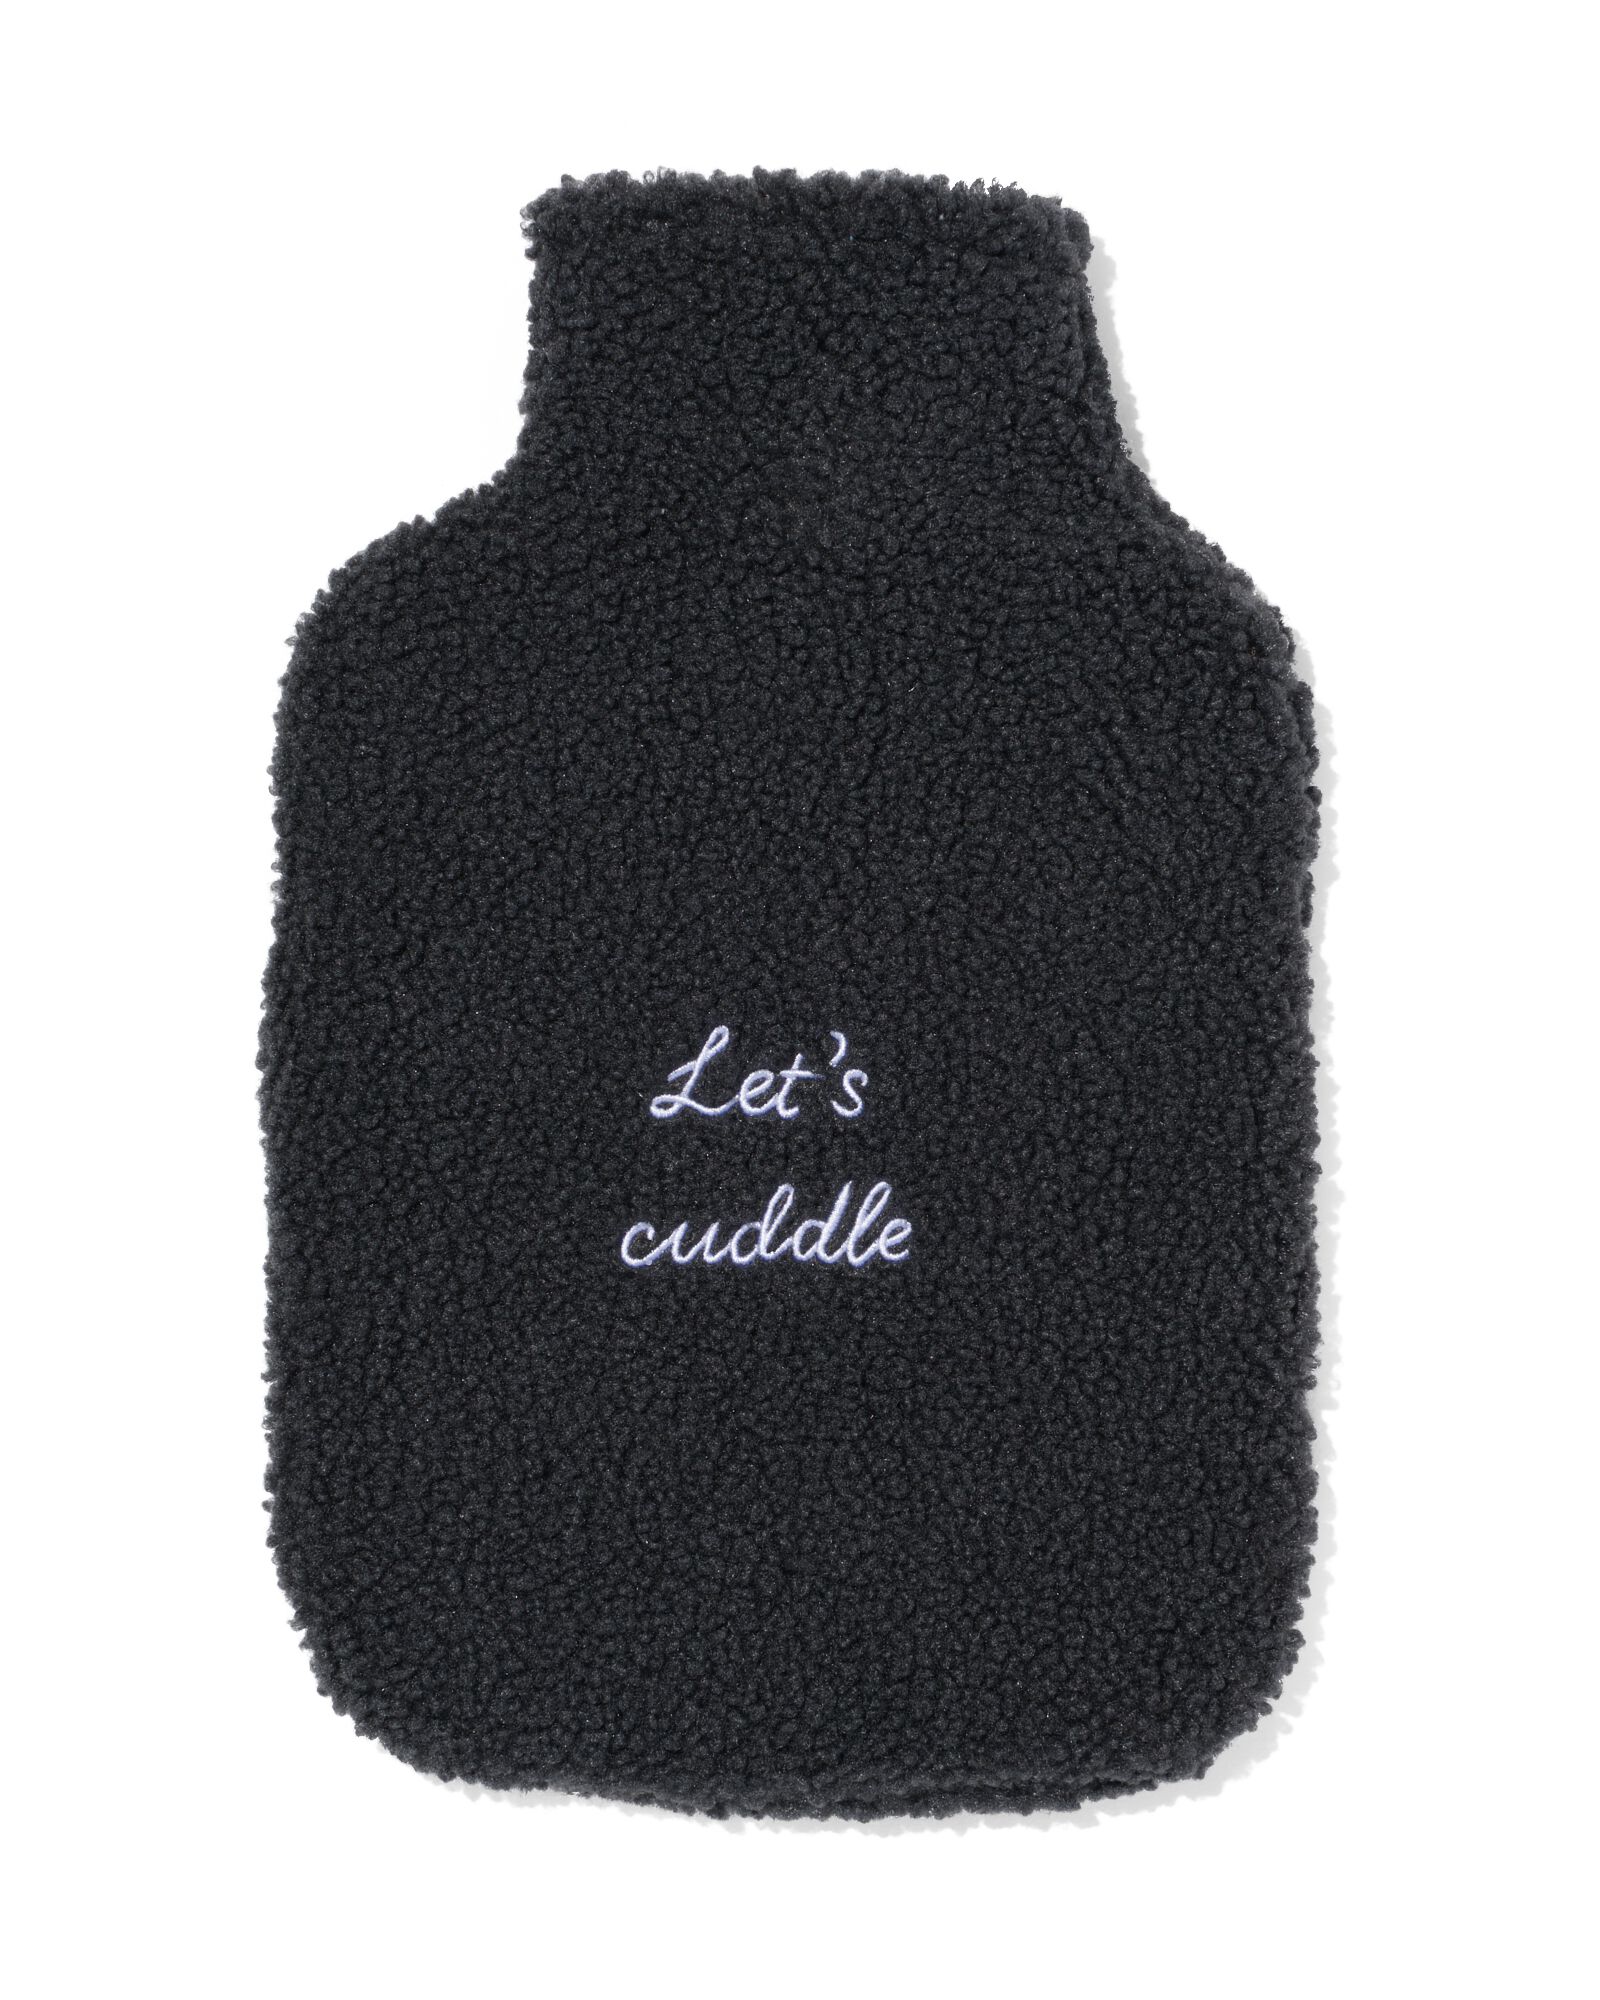 warmwaterkruik 'let's cuddle' - 61130270 - HEMA